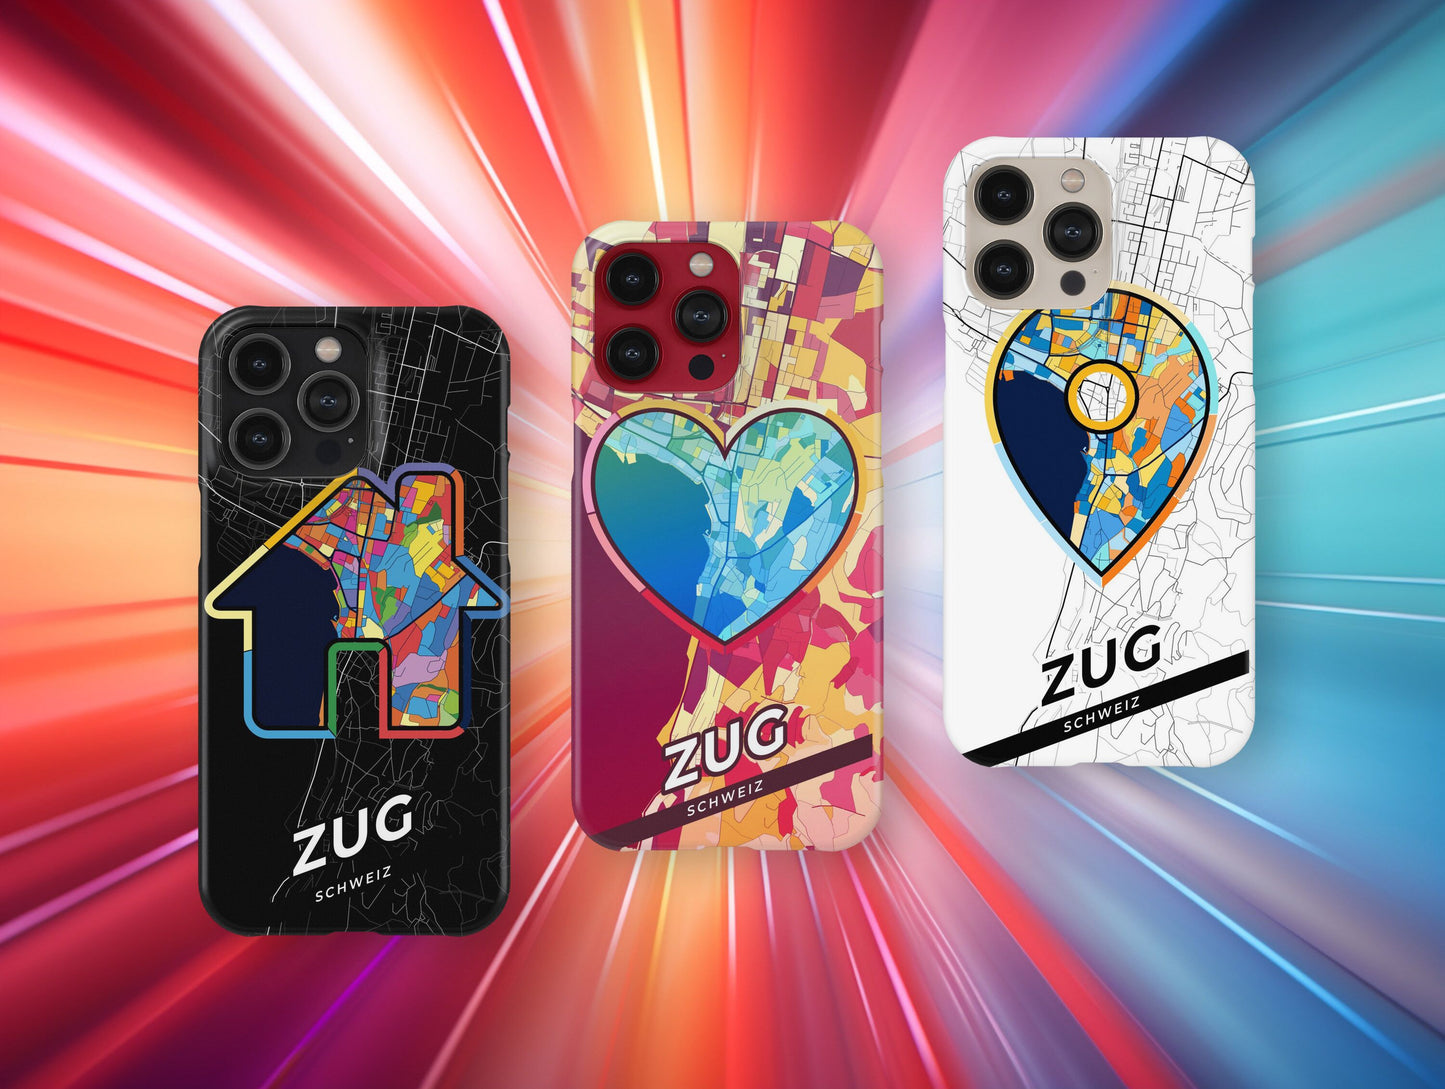 Zug Switzerland slim phone case with colorful icon